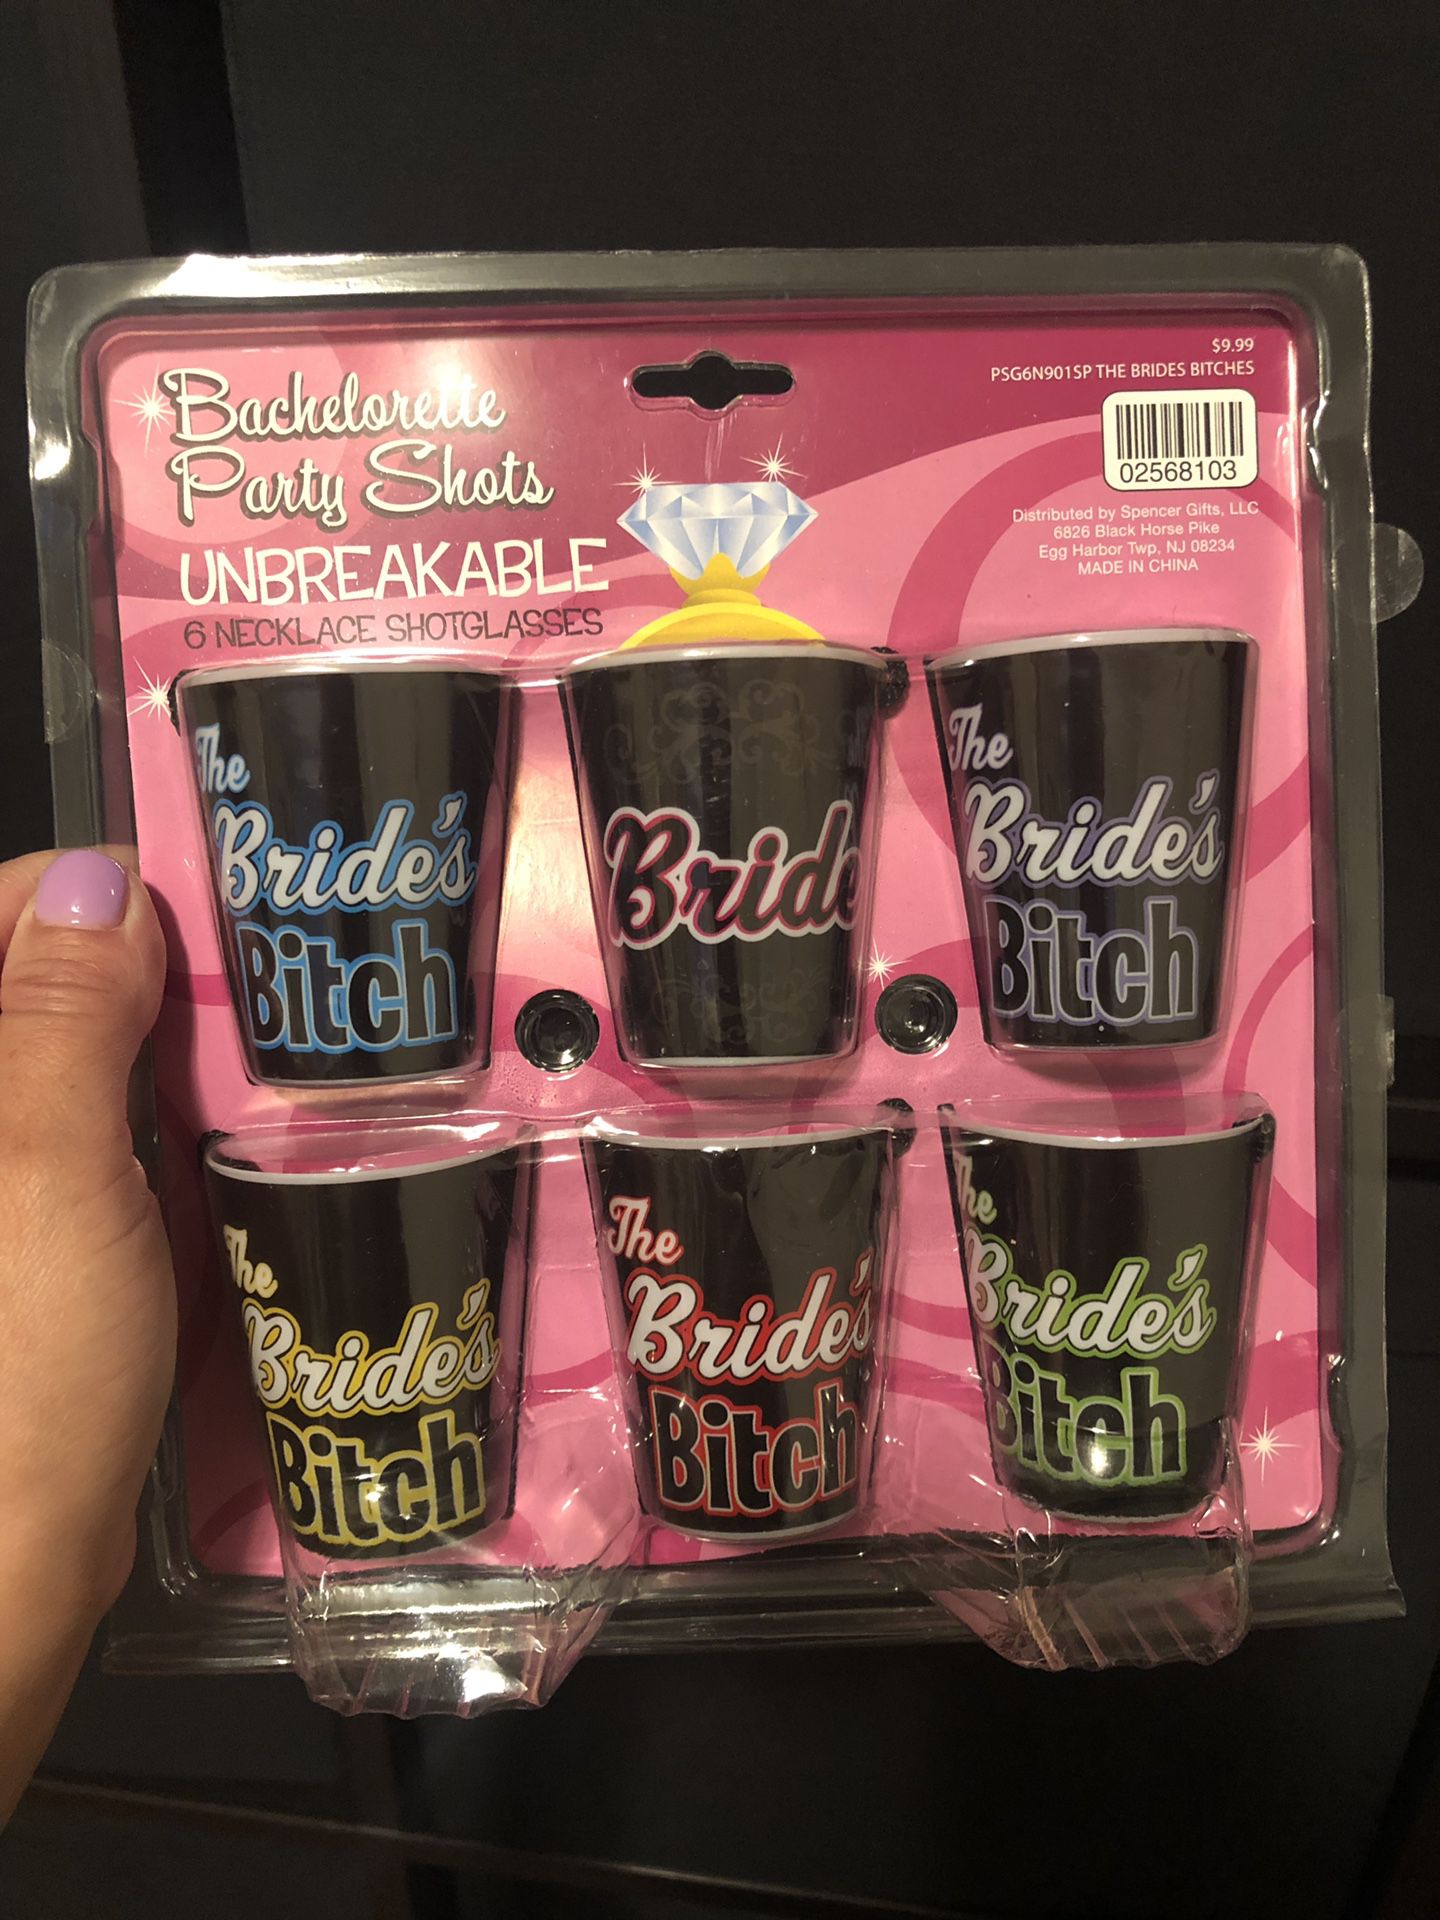 Bachelorette shot cups